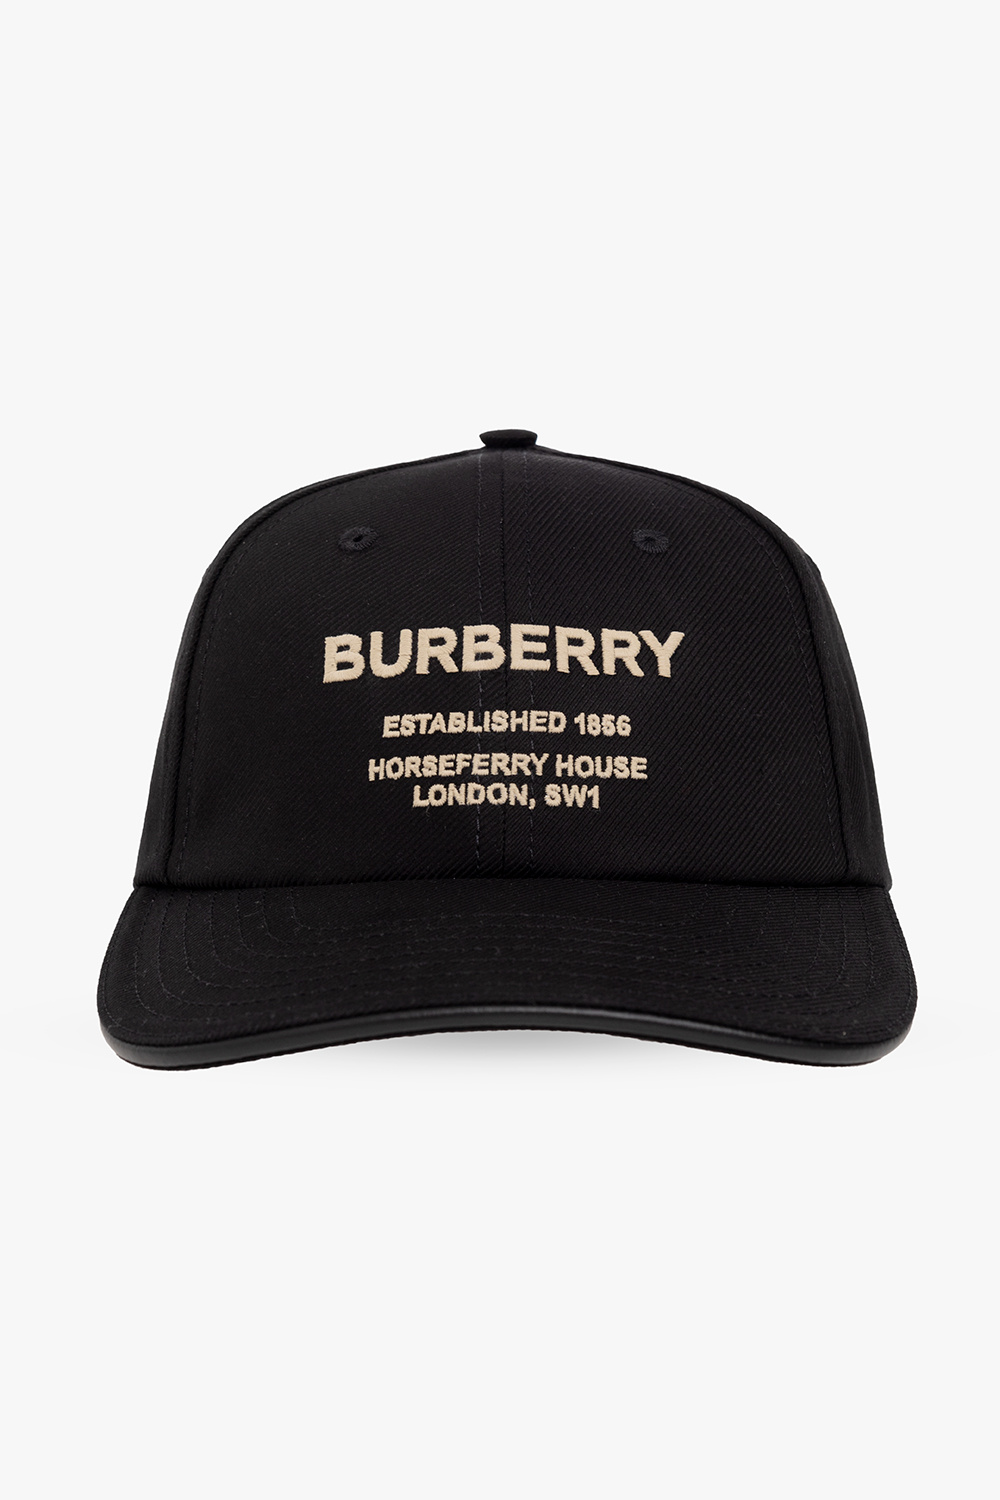 burberry Wales Baseball cap